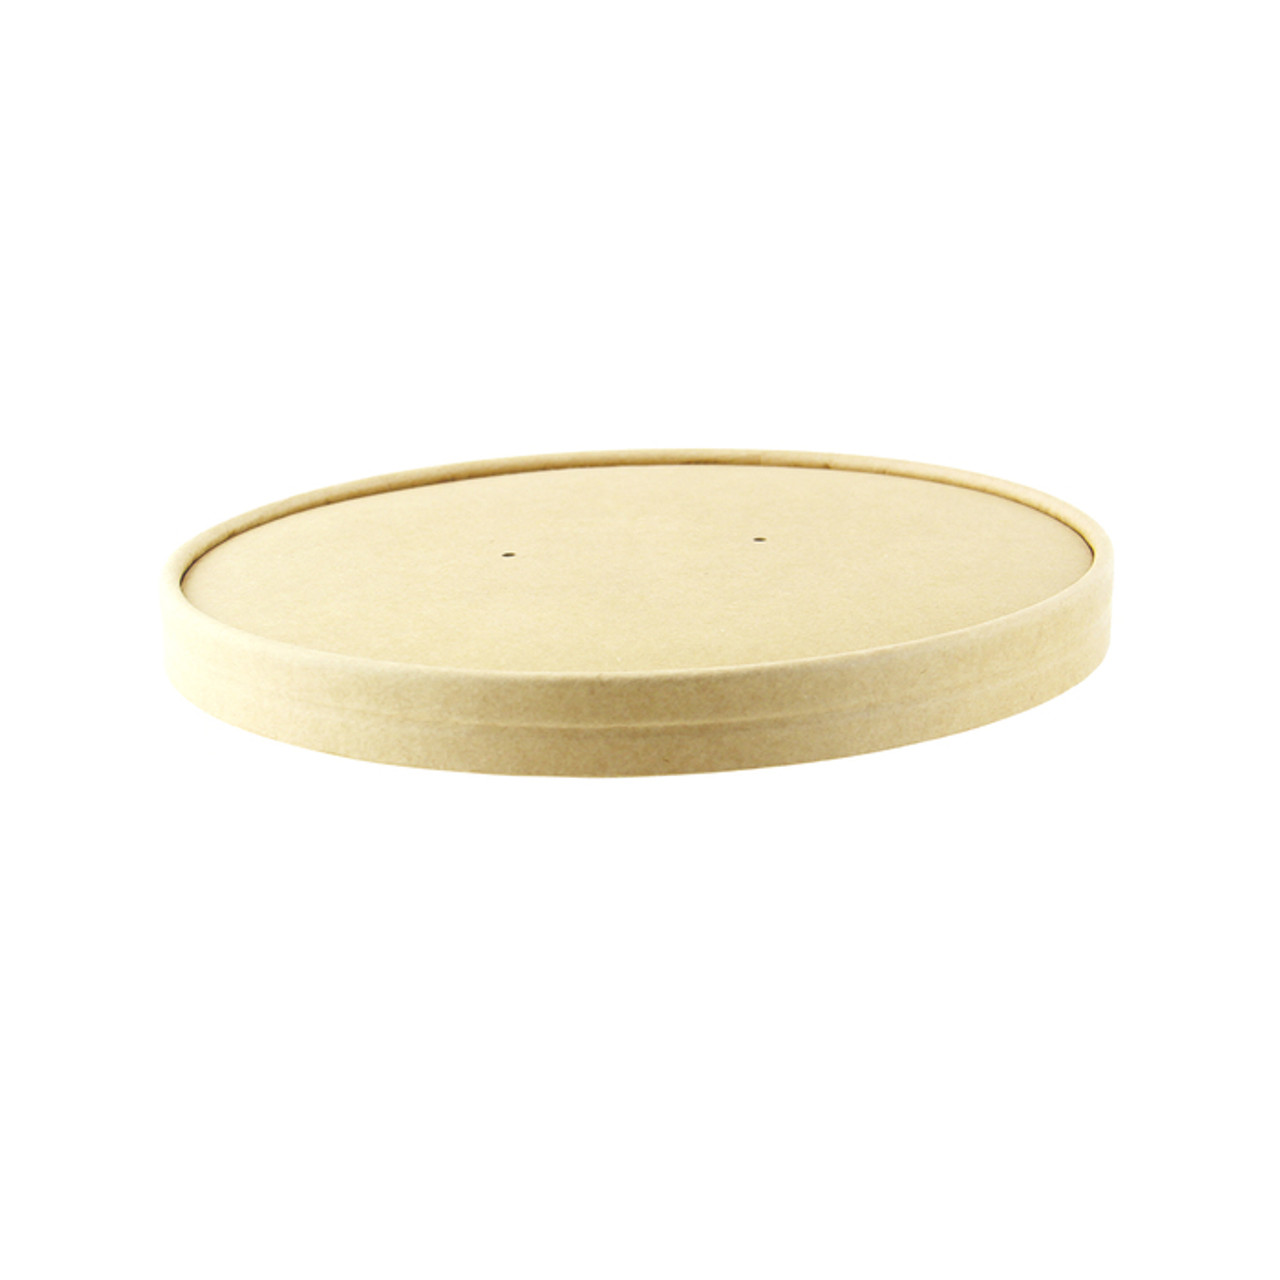 Bamboo fiber paper lid - Dia:5.9in H:0.63in - 360 pcs